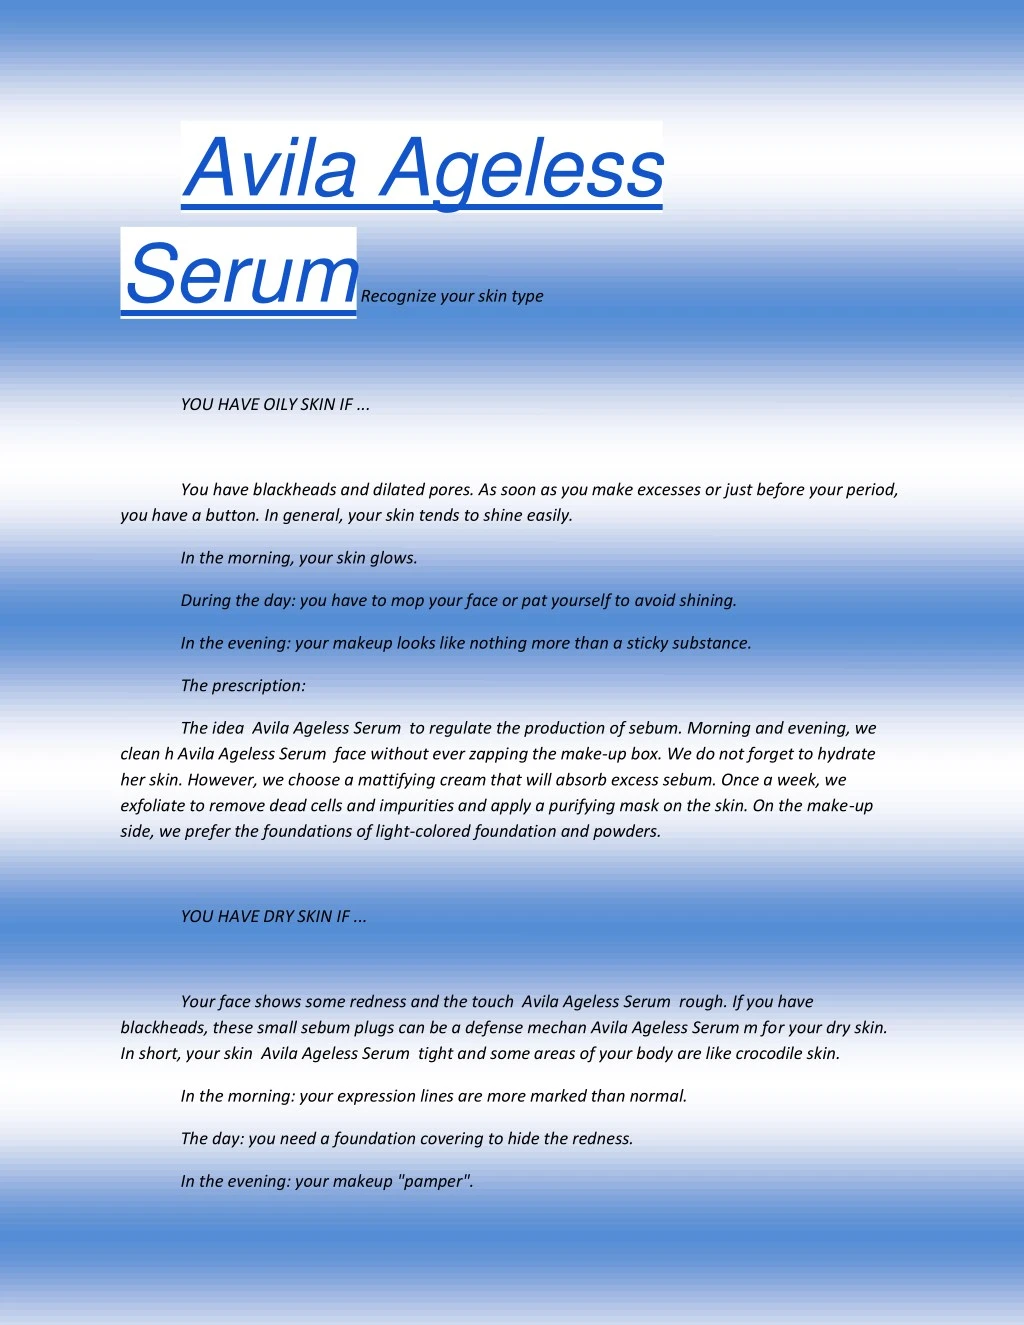 avila ageless serum recognize your skin type